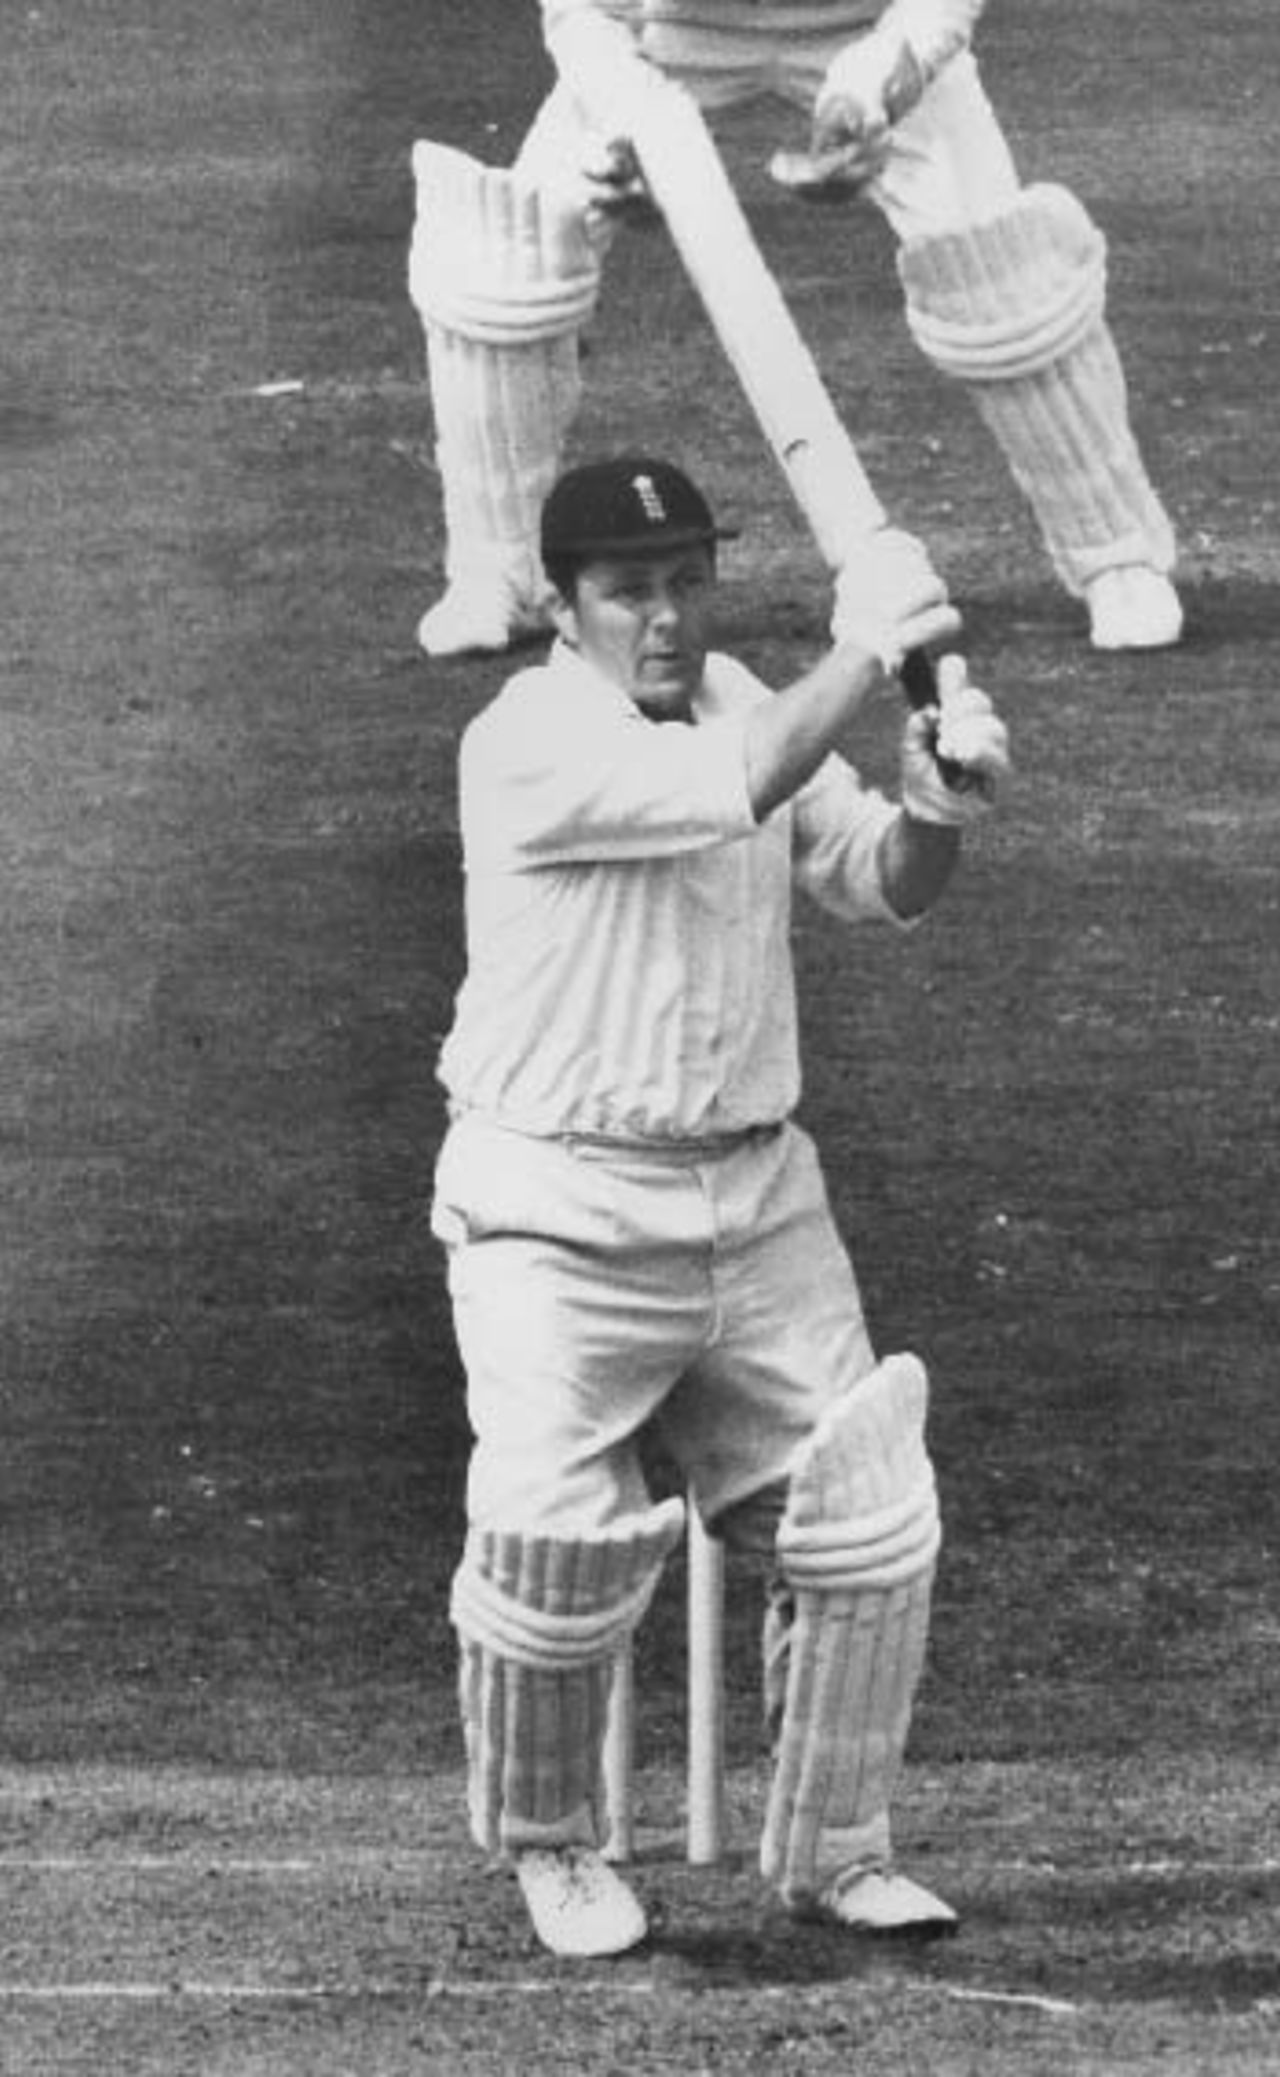 Phil Sharpe batting against New Zealand, Trent Bridge, 1969